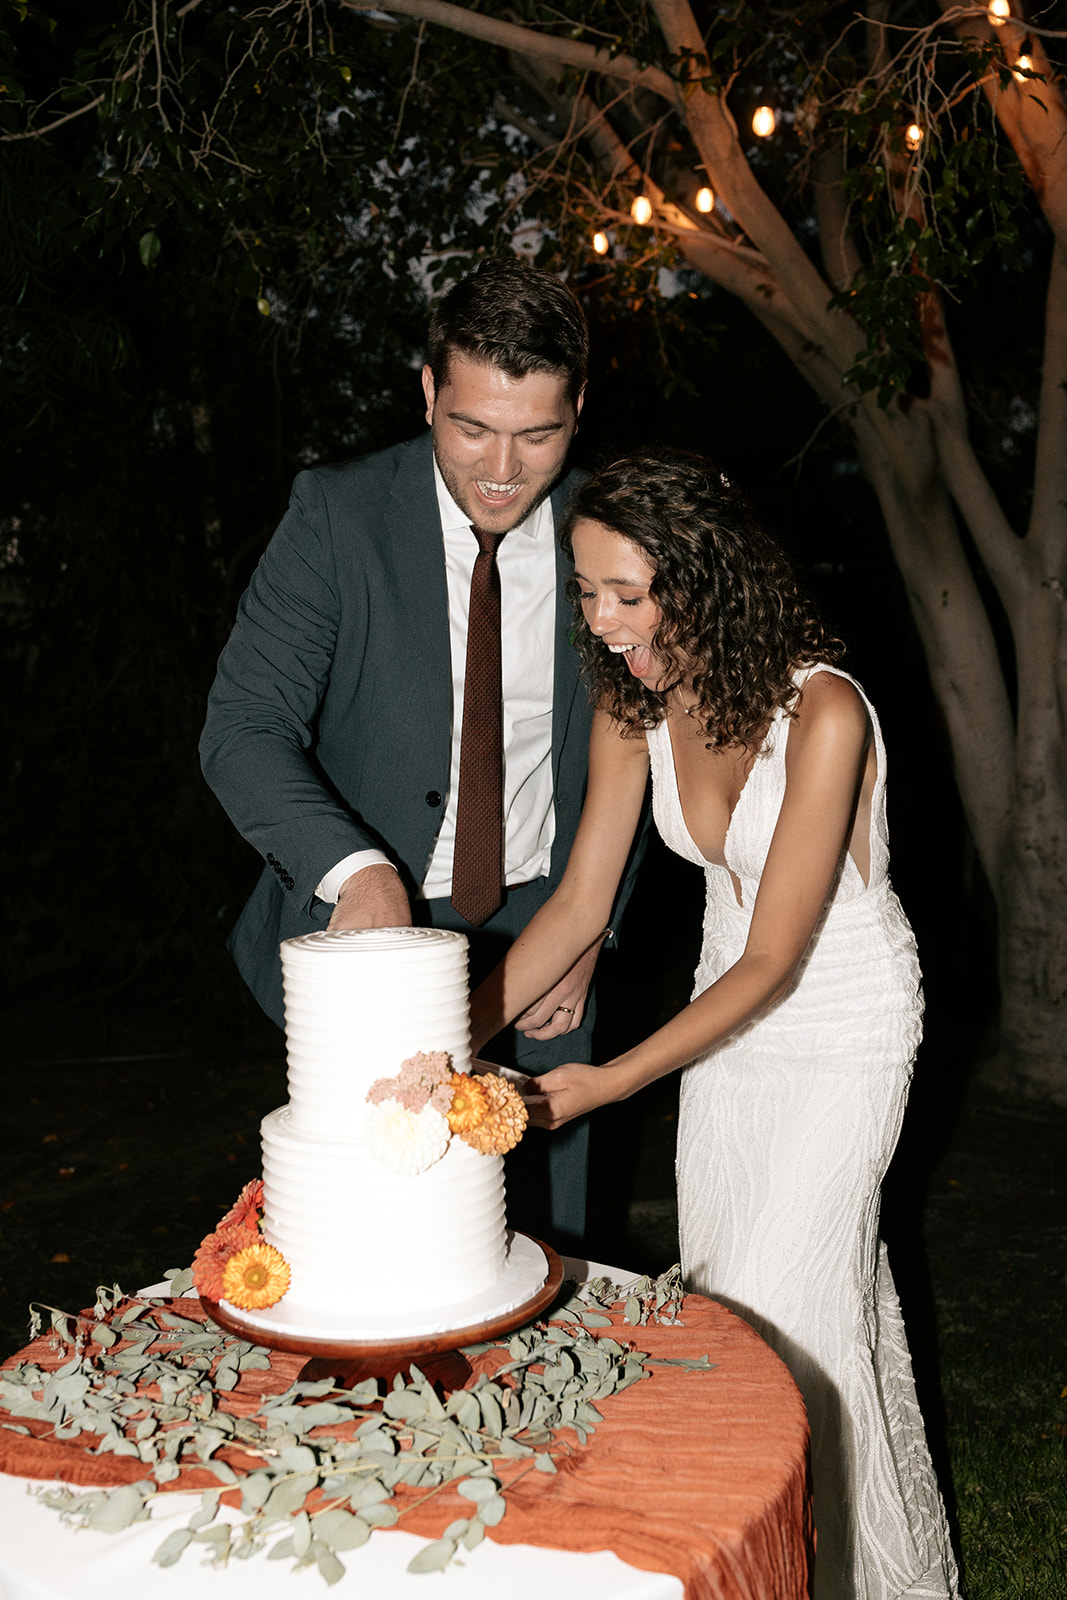 griffith house anaheim california socal orange county wedding cake cutting funny cute wedding cake ideas white cake